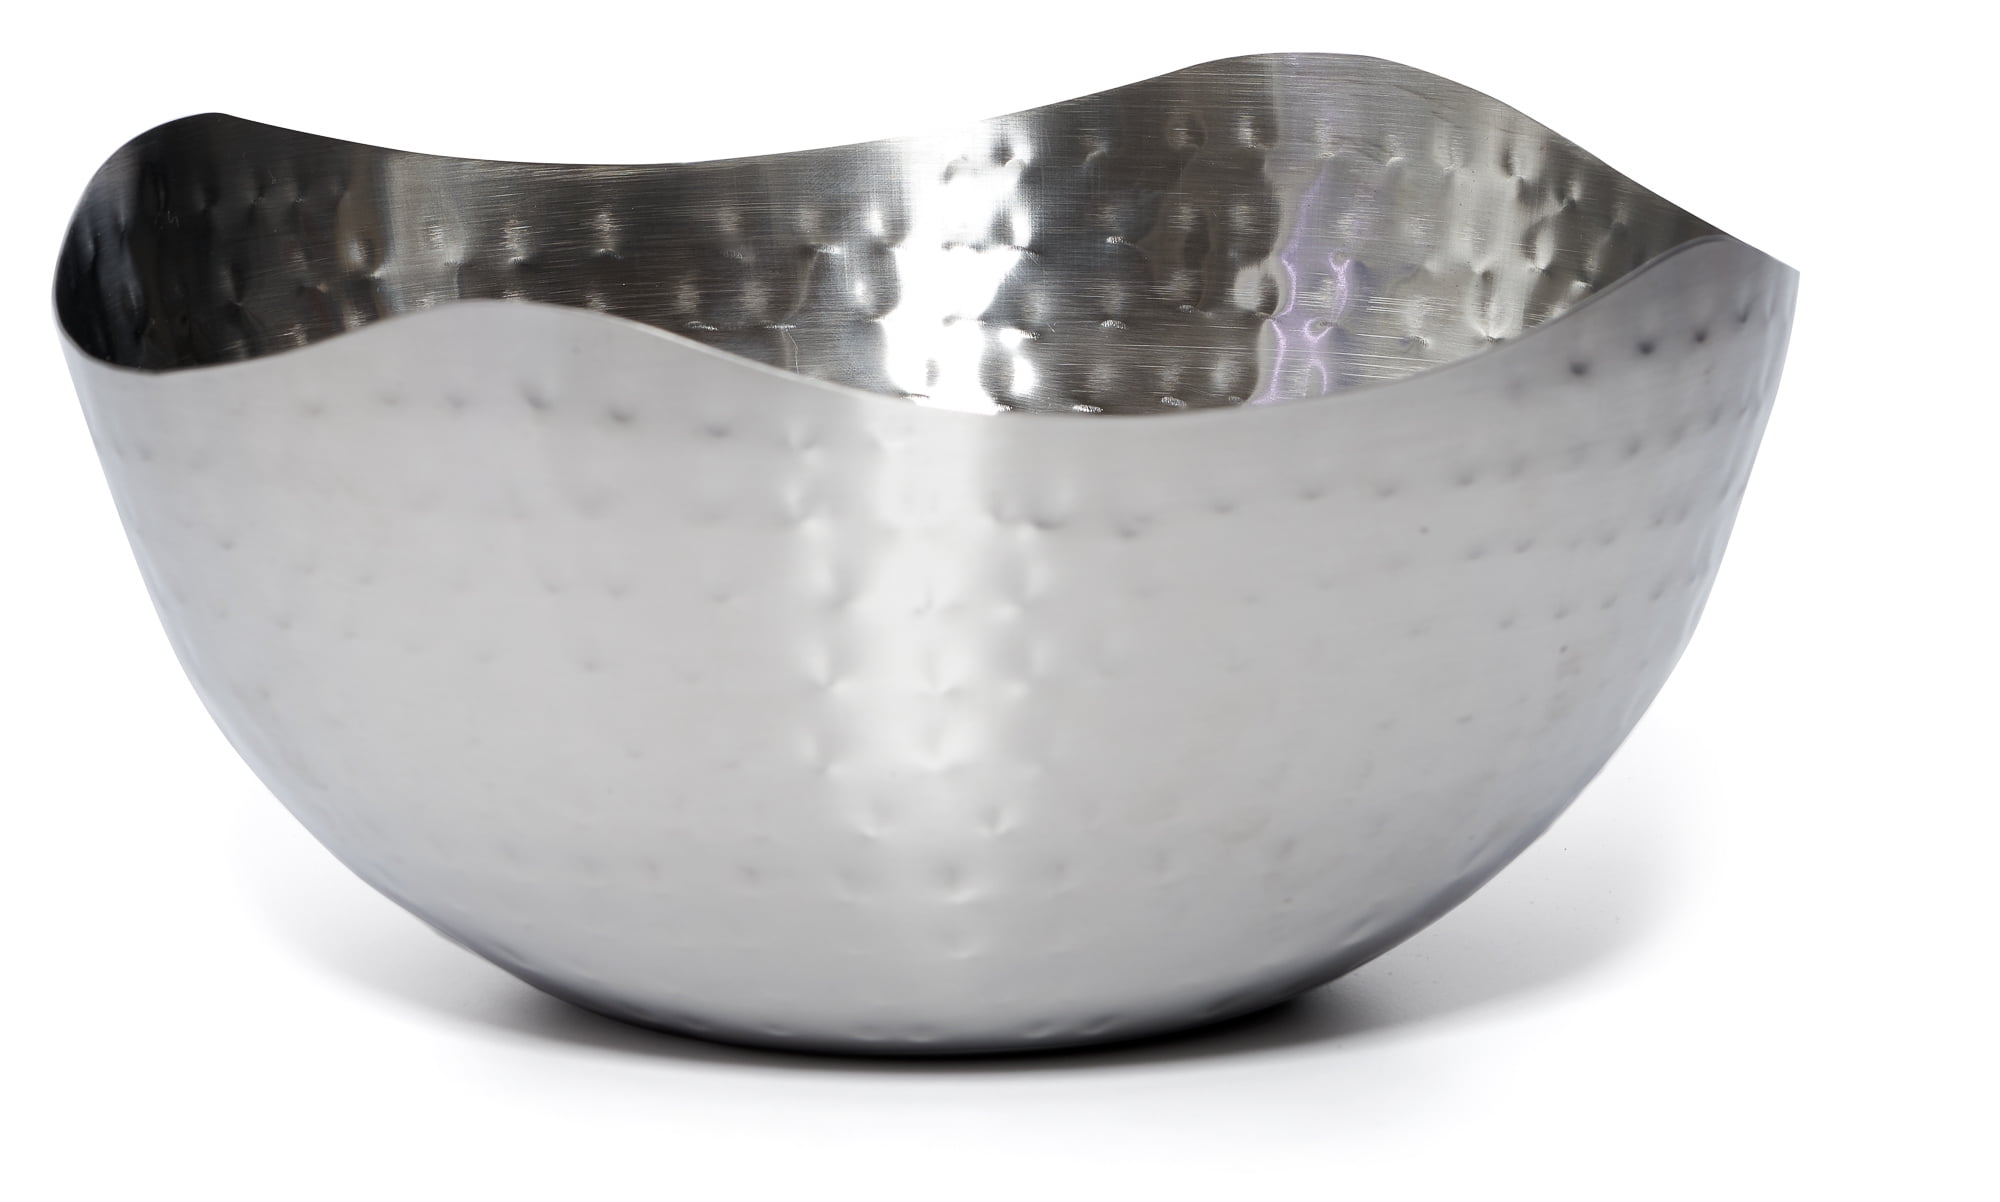 Bezrat Hammered Stainless Steel Serving Bowl – Multipurpose Fruit/Salad